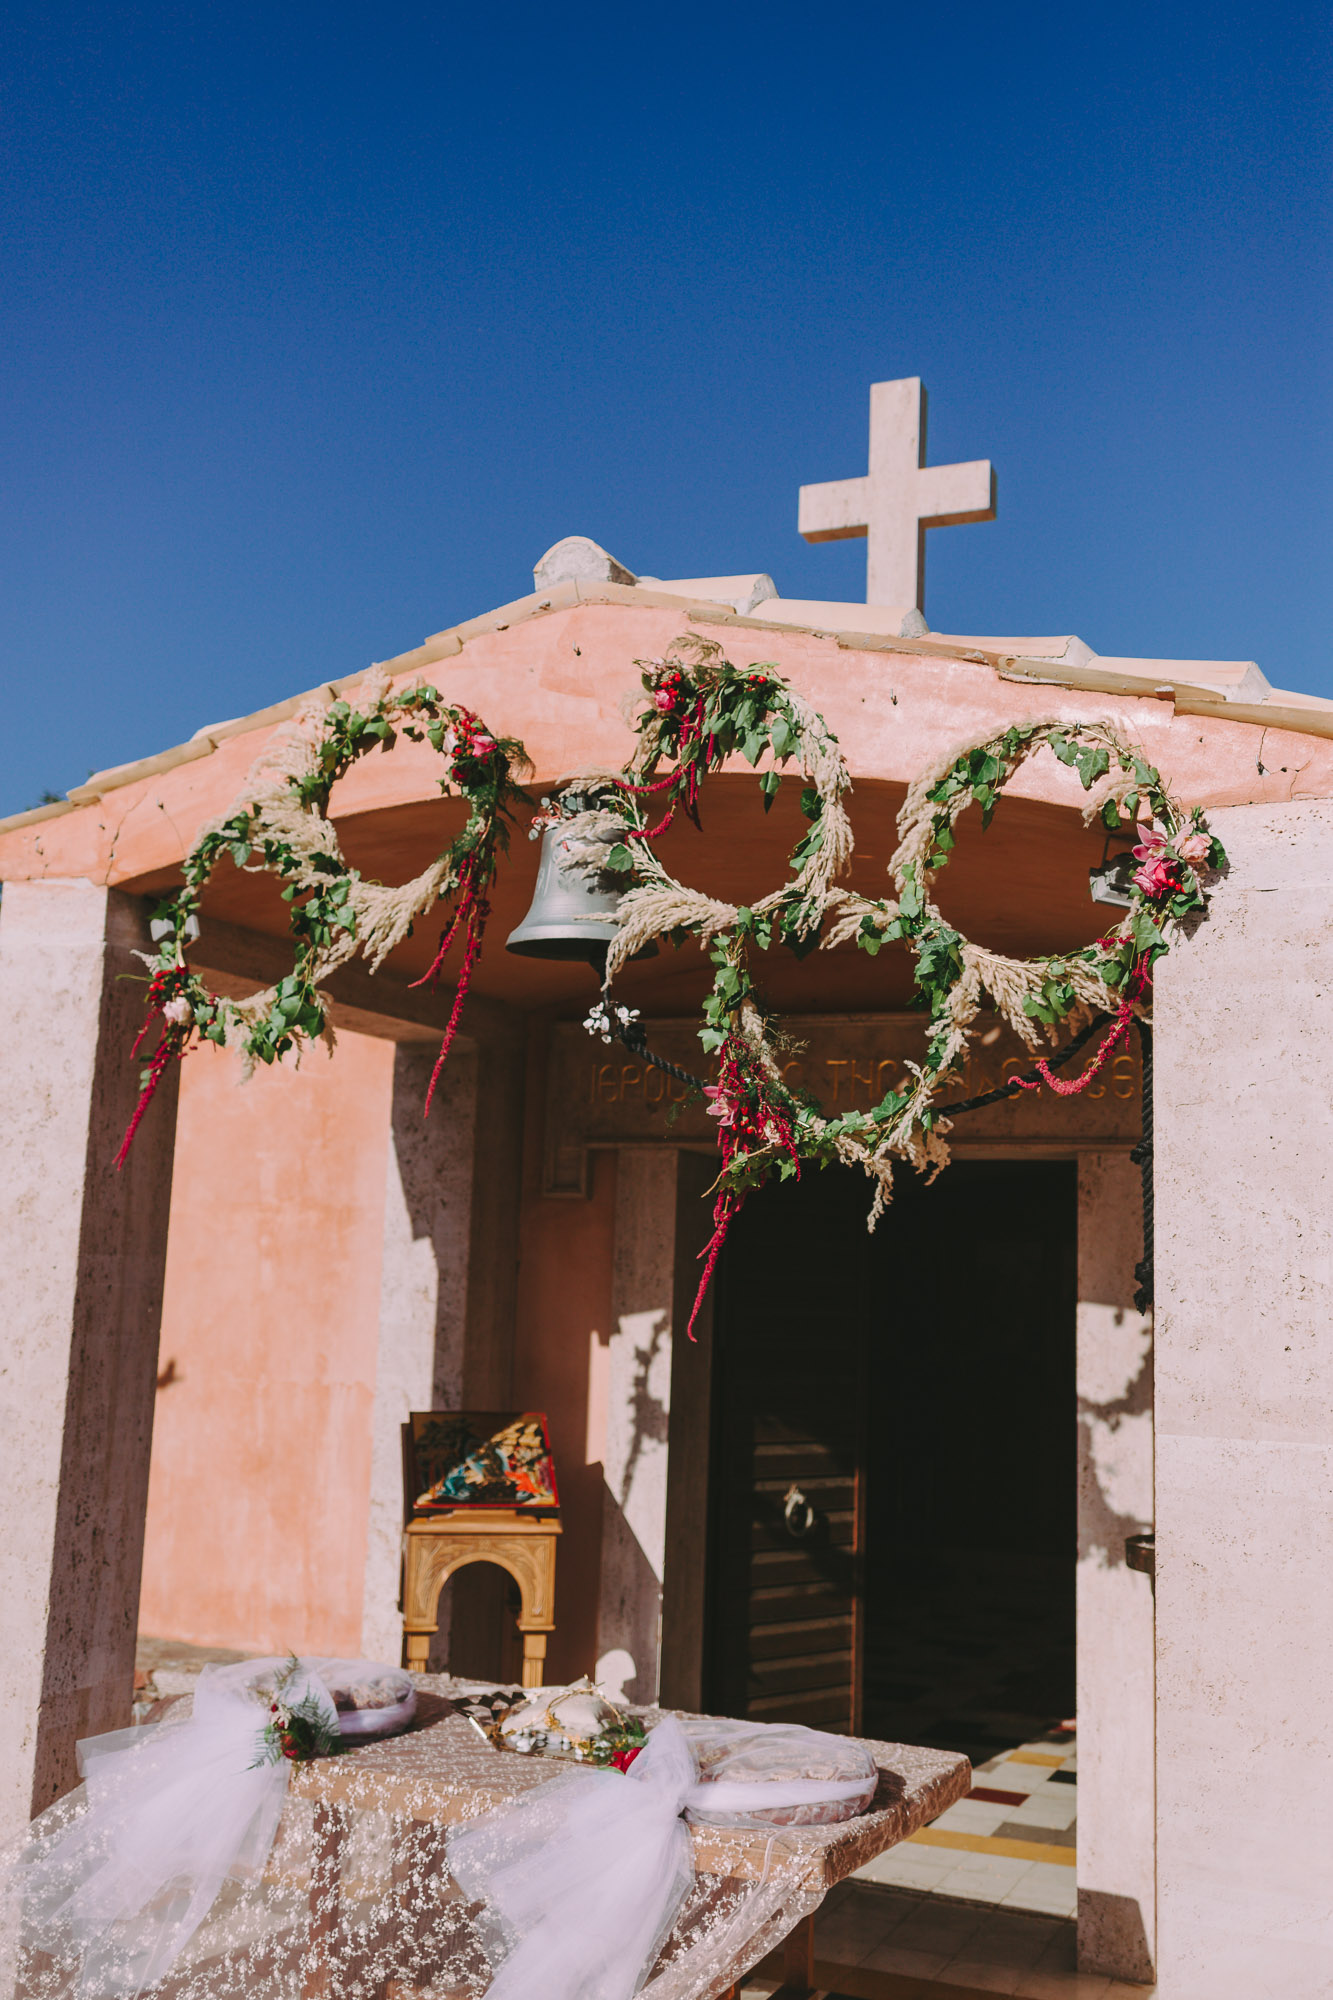 A colorful rustic wedding at Ktimas Laas